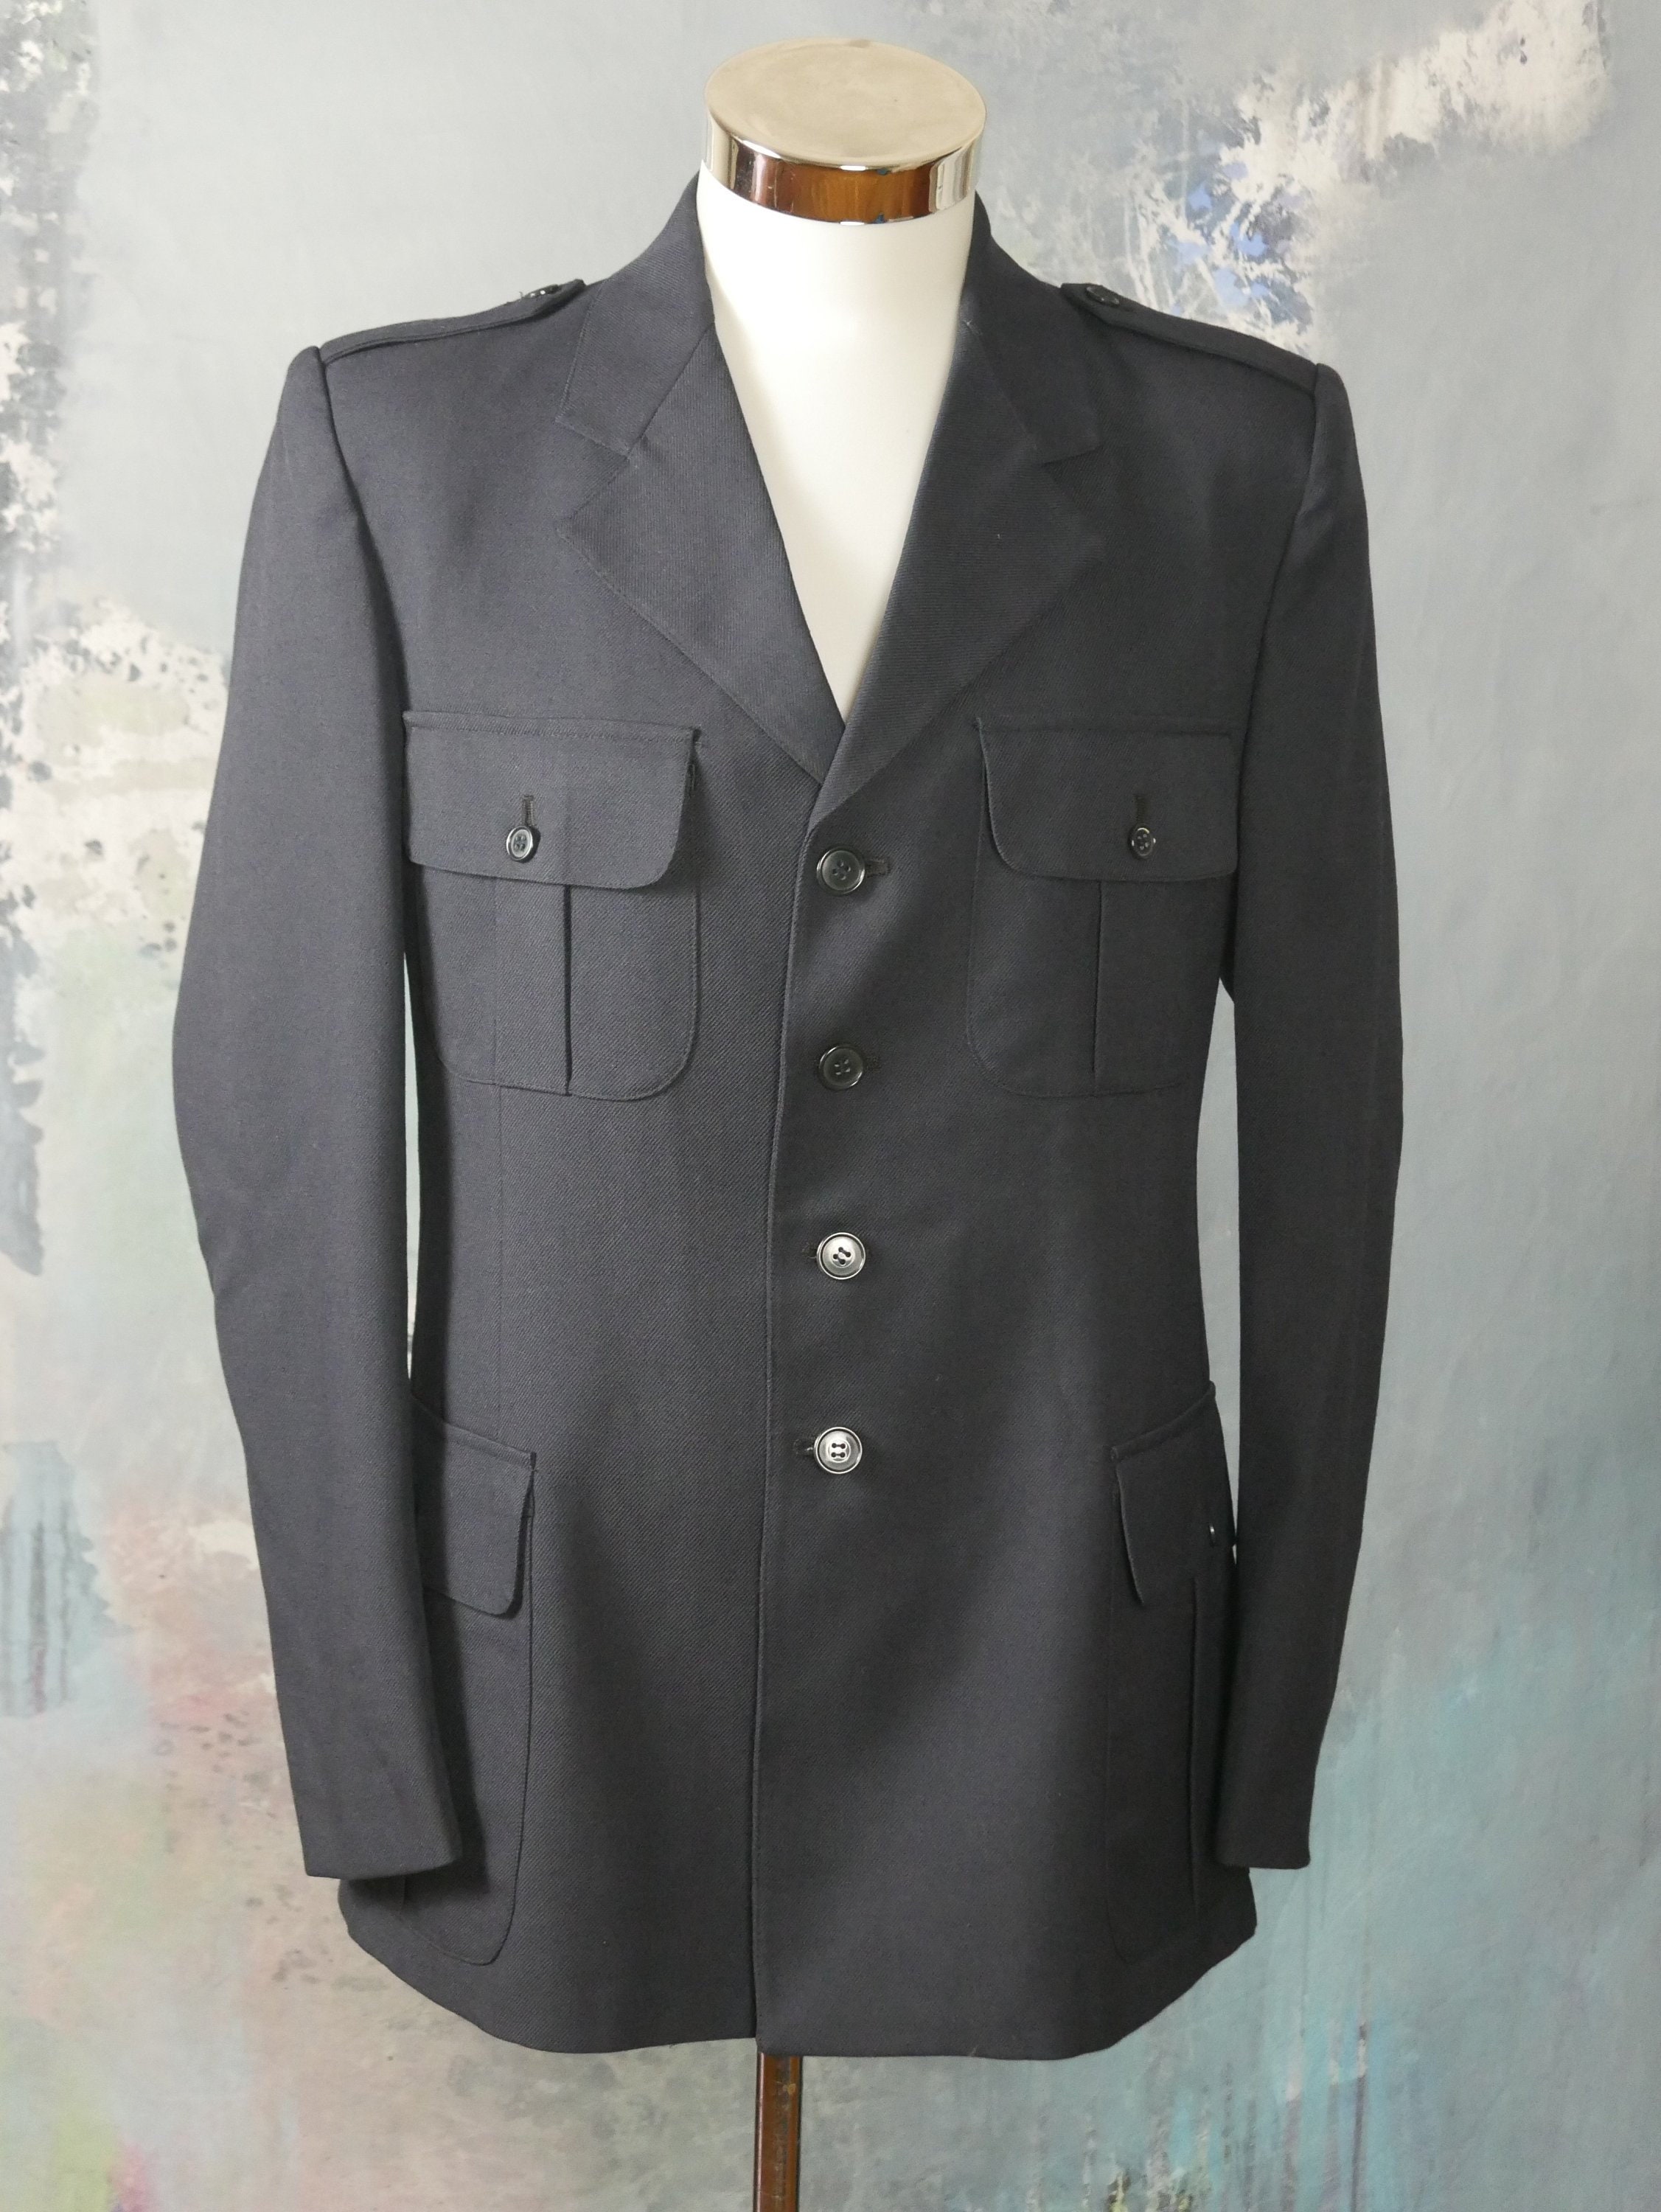 German Army grey officers blazer tunic jacket coat military uniform Bundeswehr 